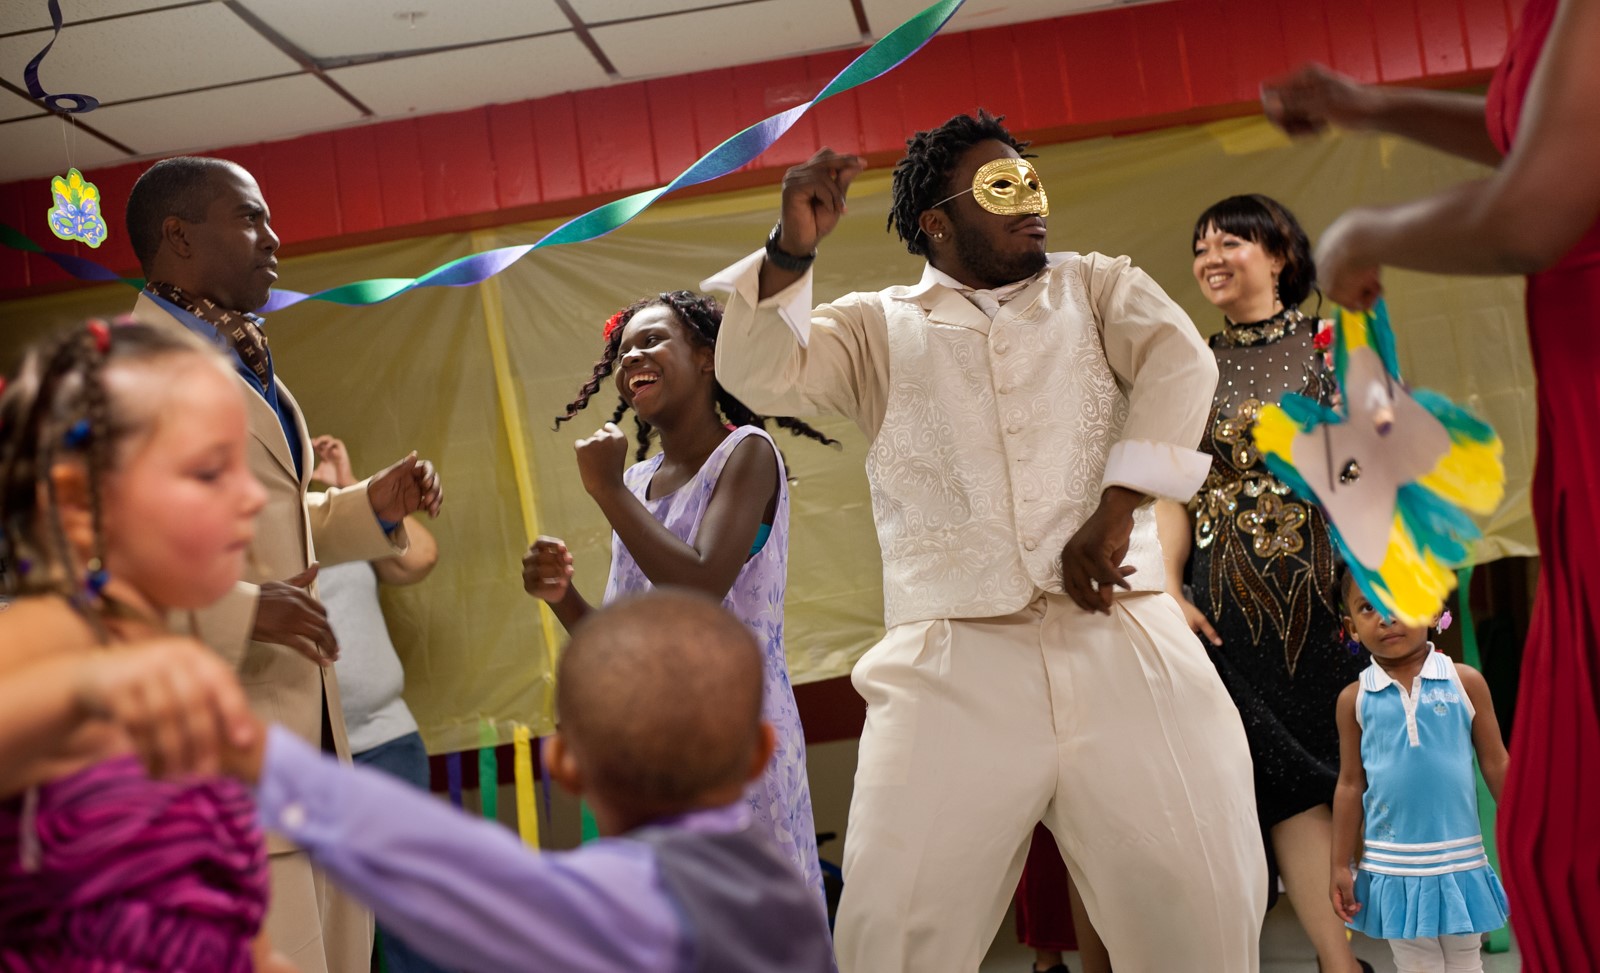 A man dances at a Mardi Gras-themed party.